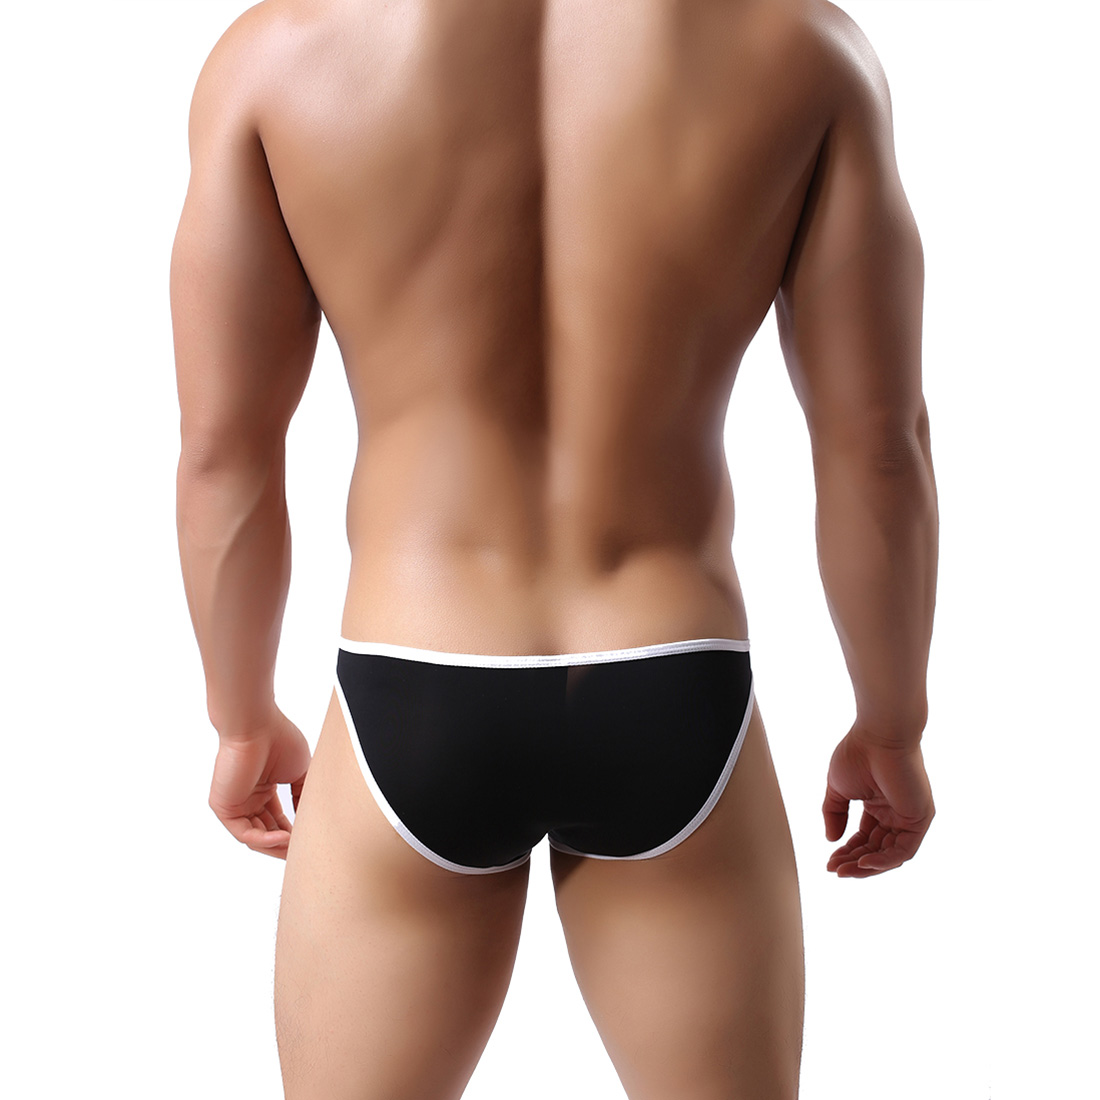 Men's Lingerie Underwear Sexy Briefs Triangle Pants Shorts WH46 Black M